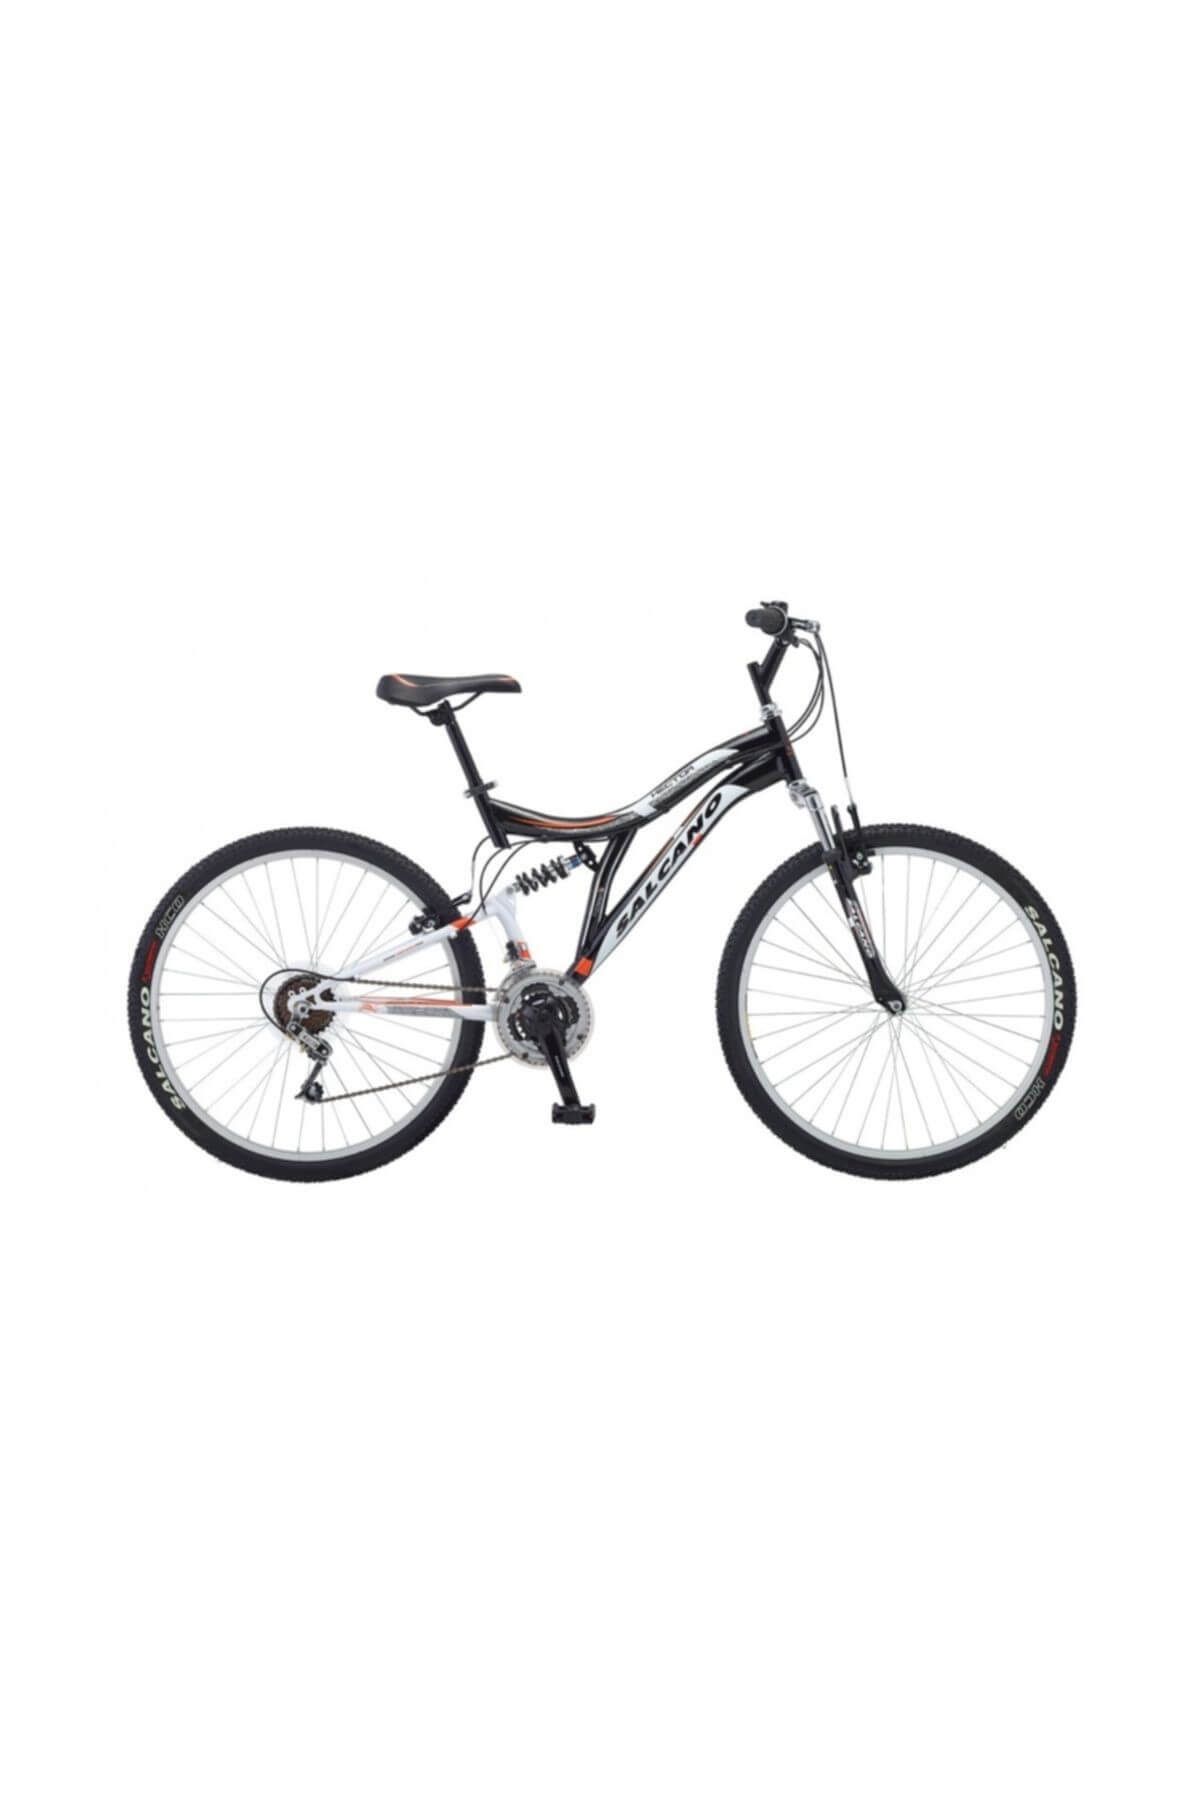 Salcano Hector V 21 Vites 26 Jant Bisiklet 2018 Model 393 Beyaz Mavi Siyah